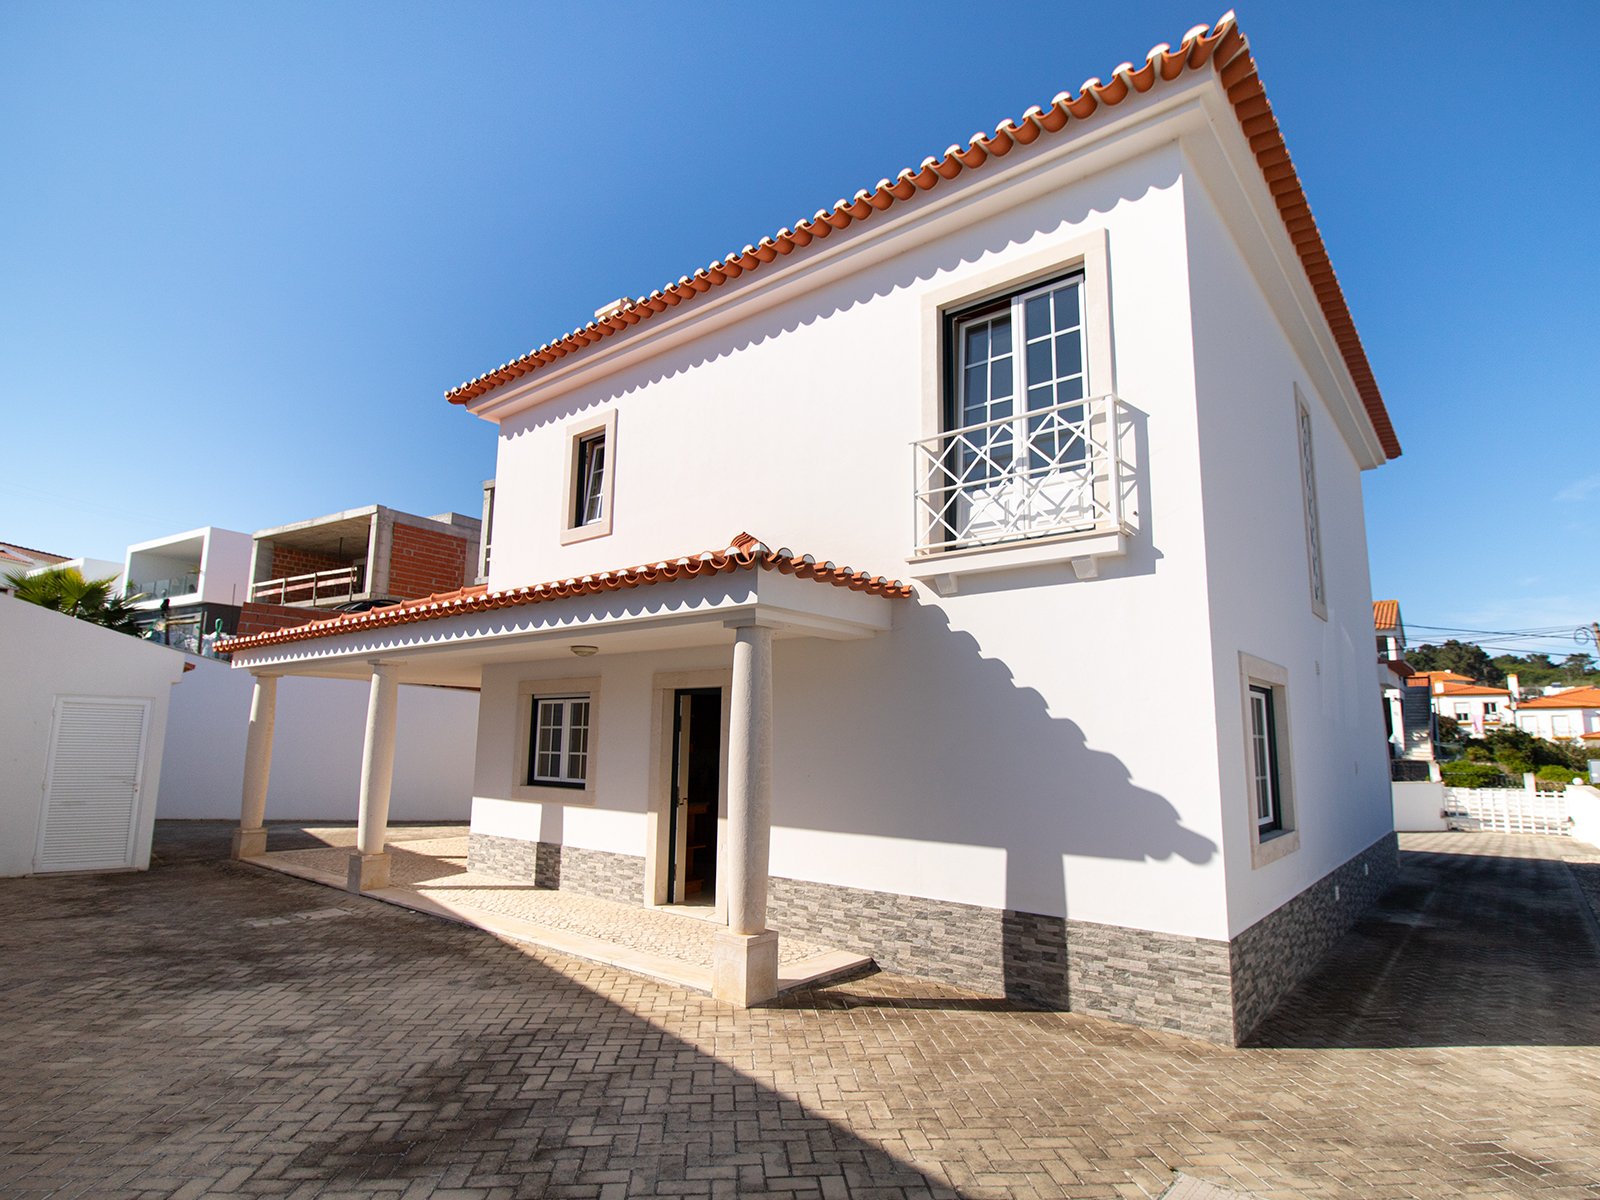 House for sale in Foz Do Arelho, Silver Coast, Portugal 4075044642